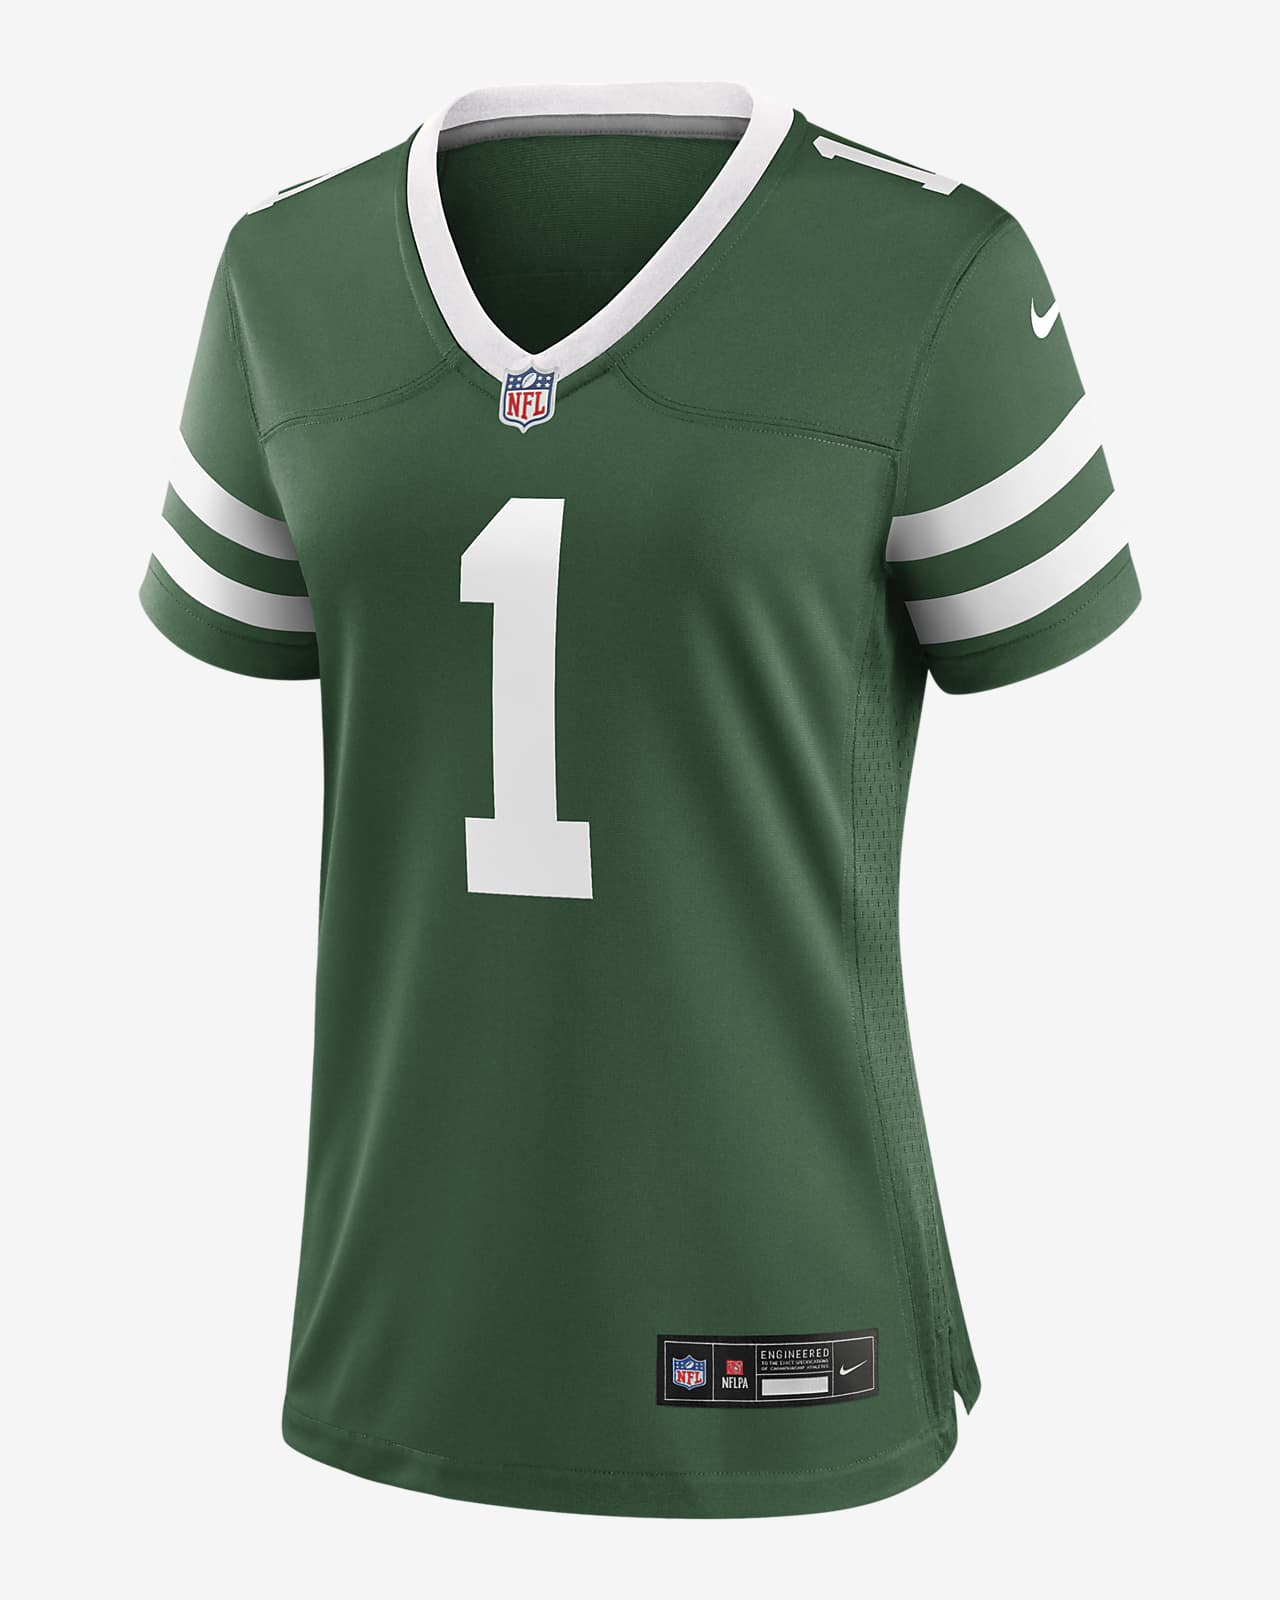 Sauce Gardner New York Jets Women's Nike NFL Game Football Jersey